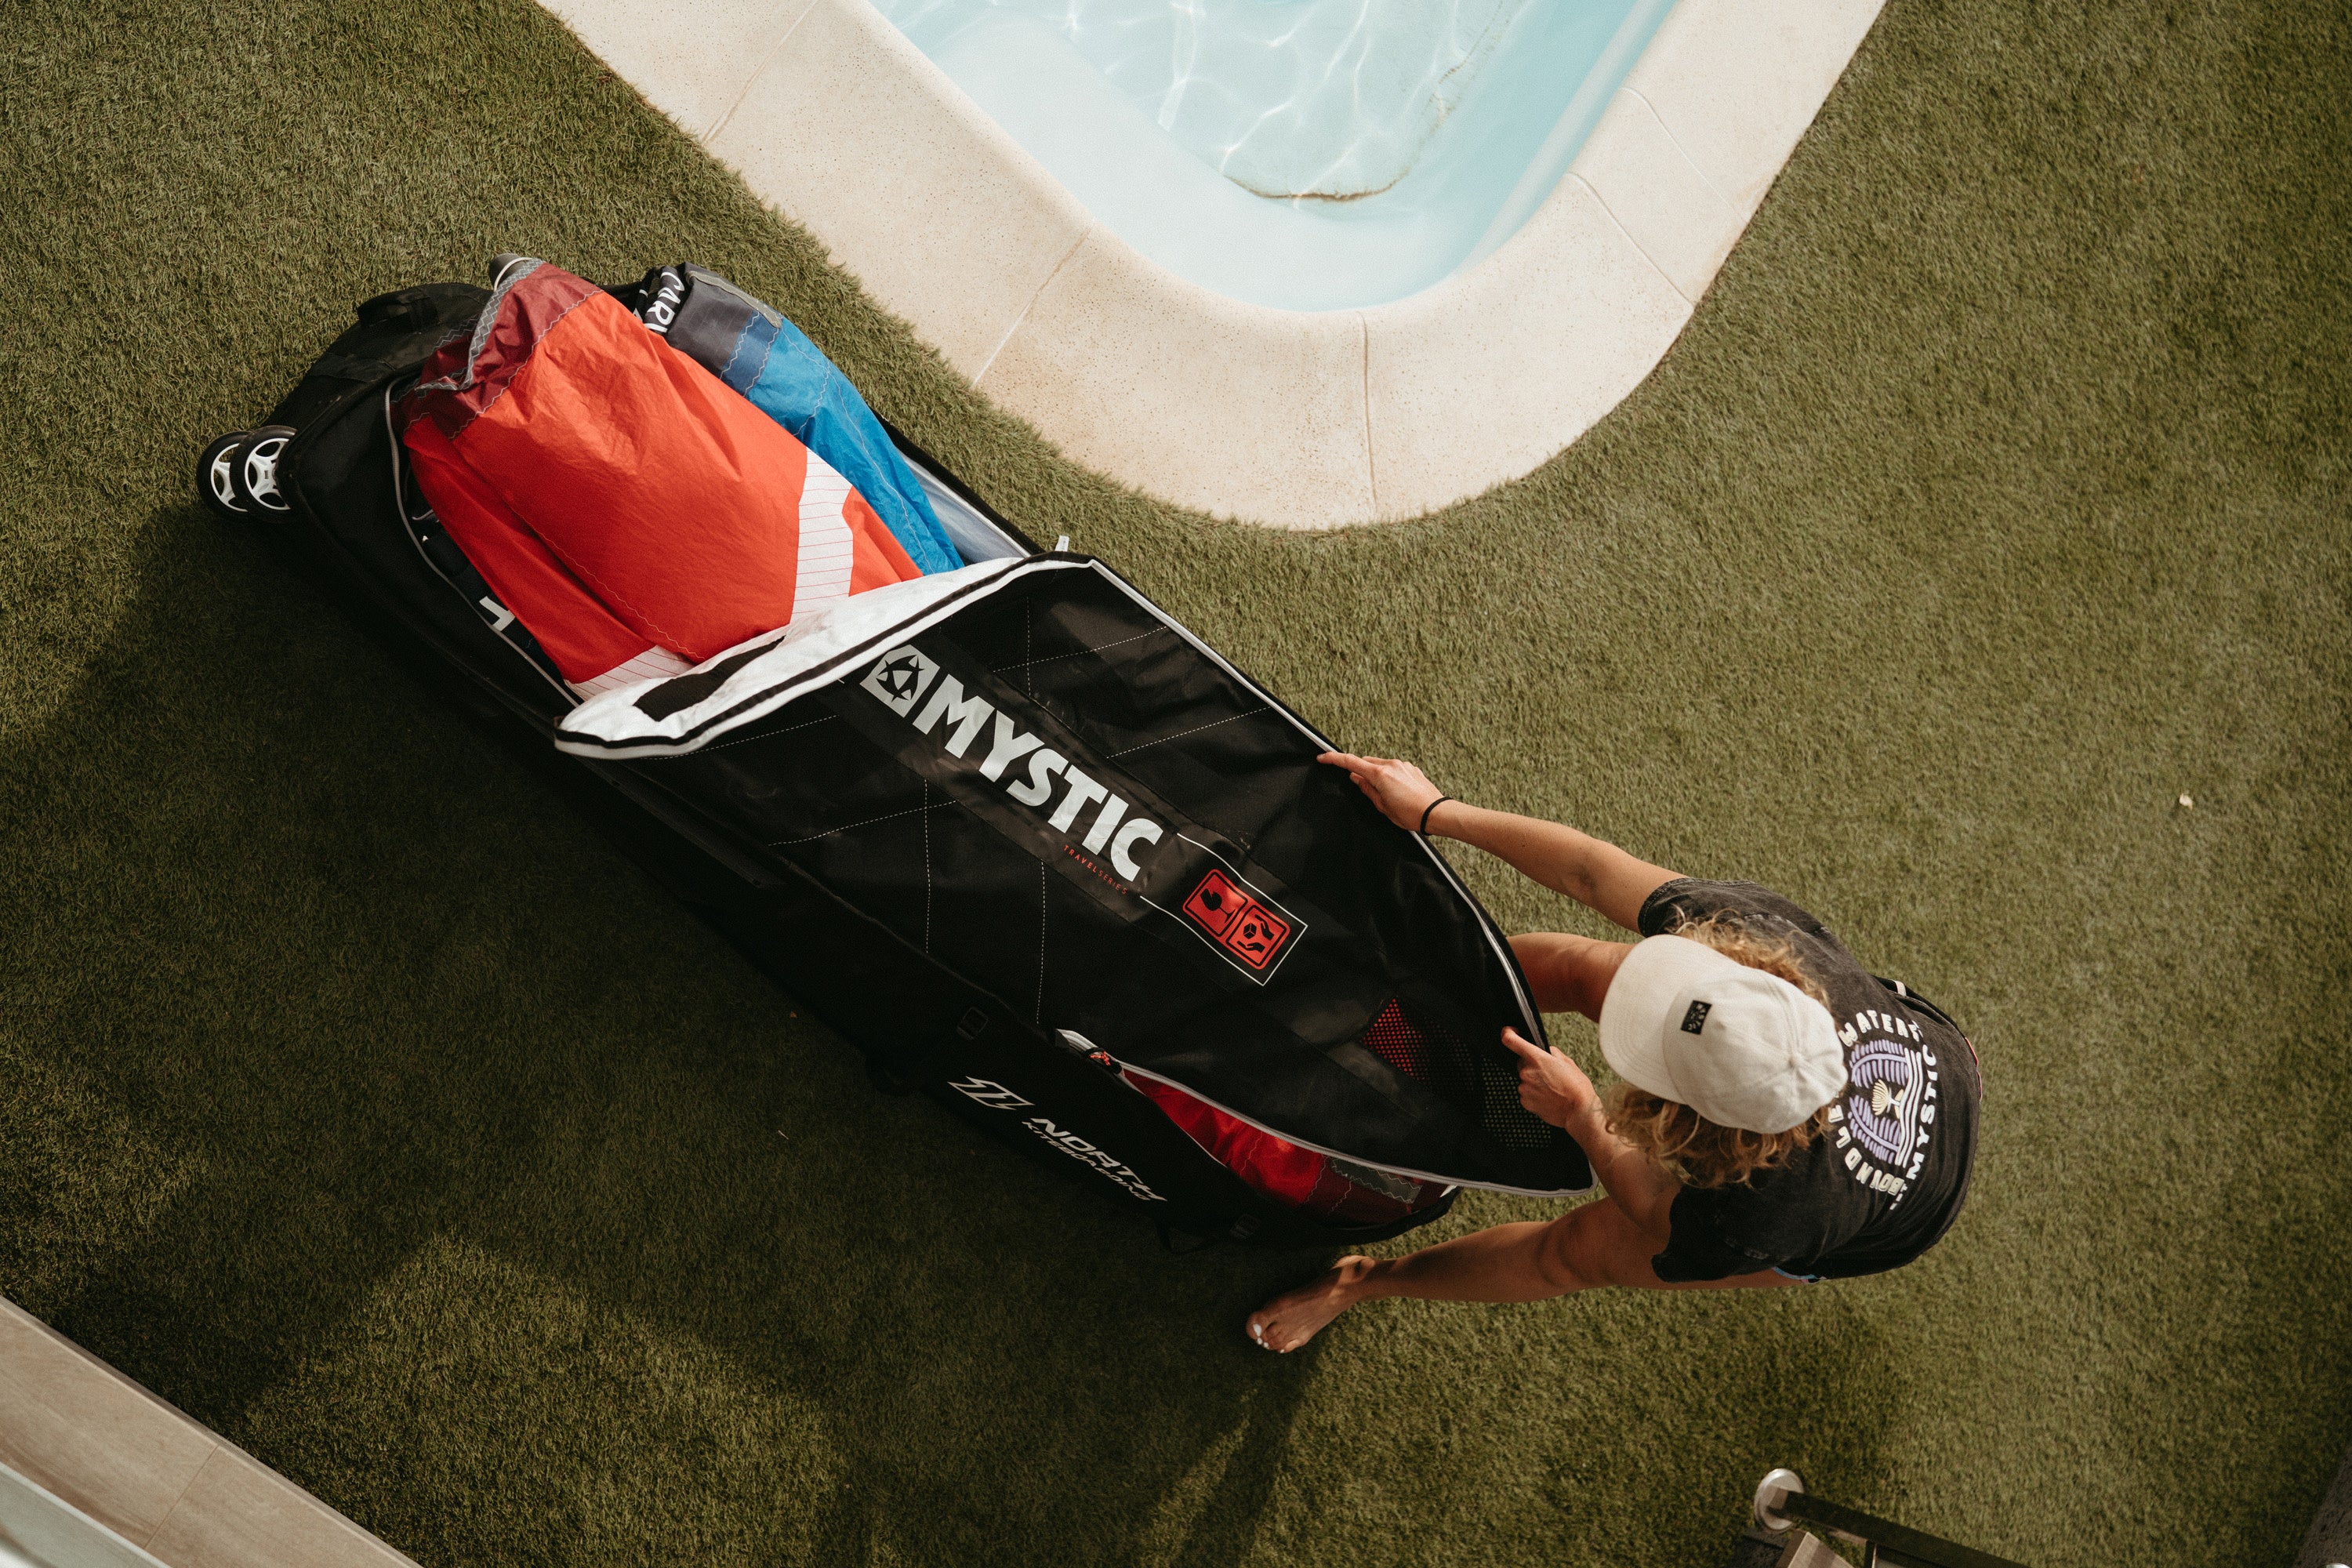 Mystic Surf Pro Bag